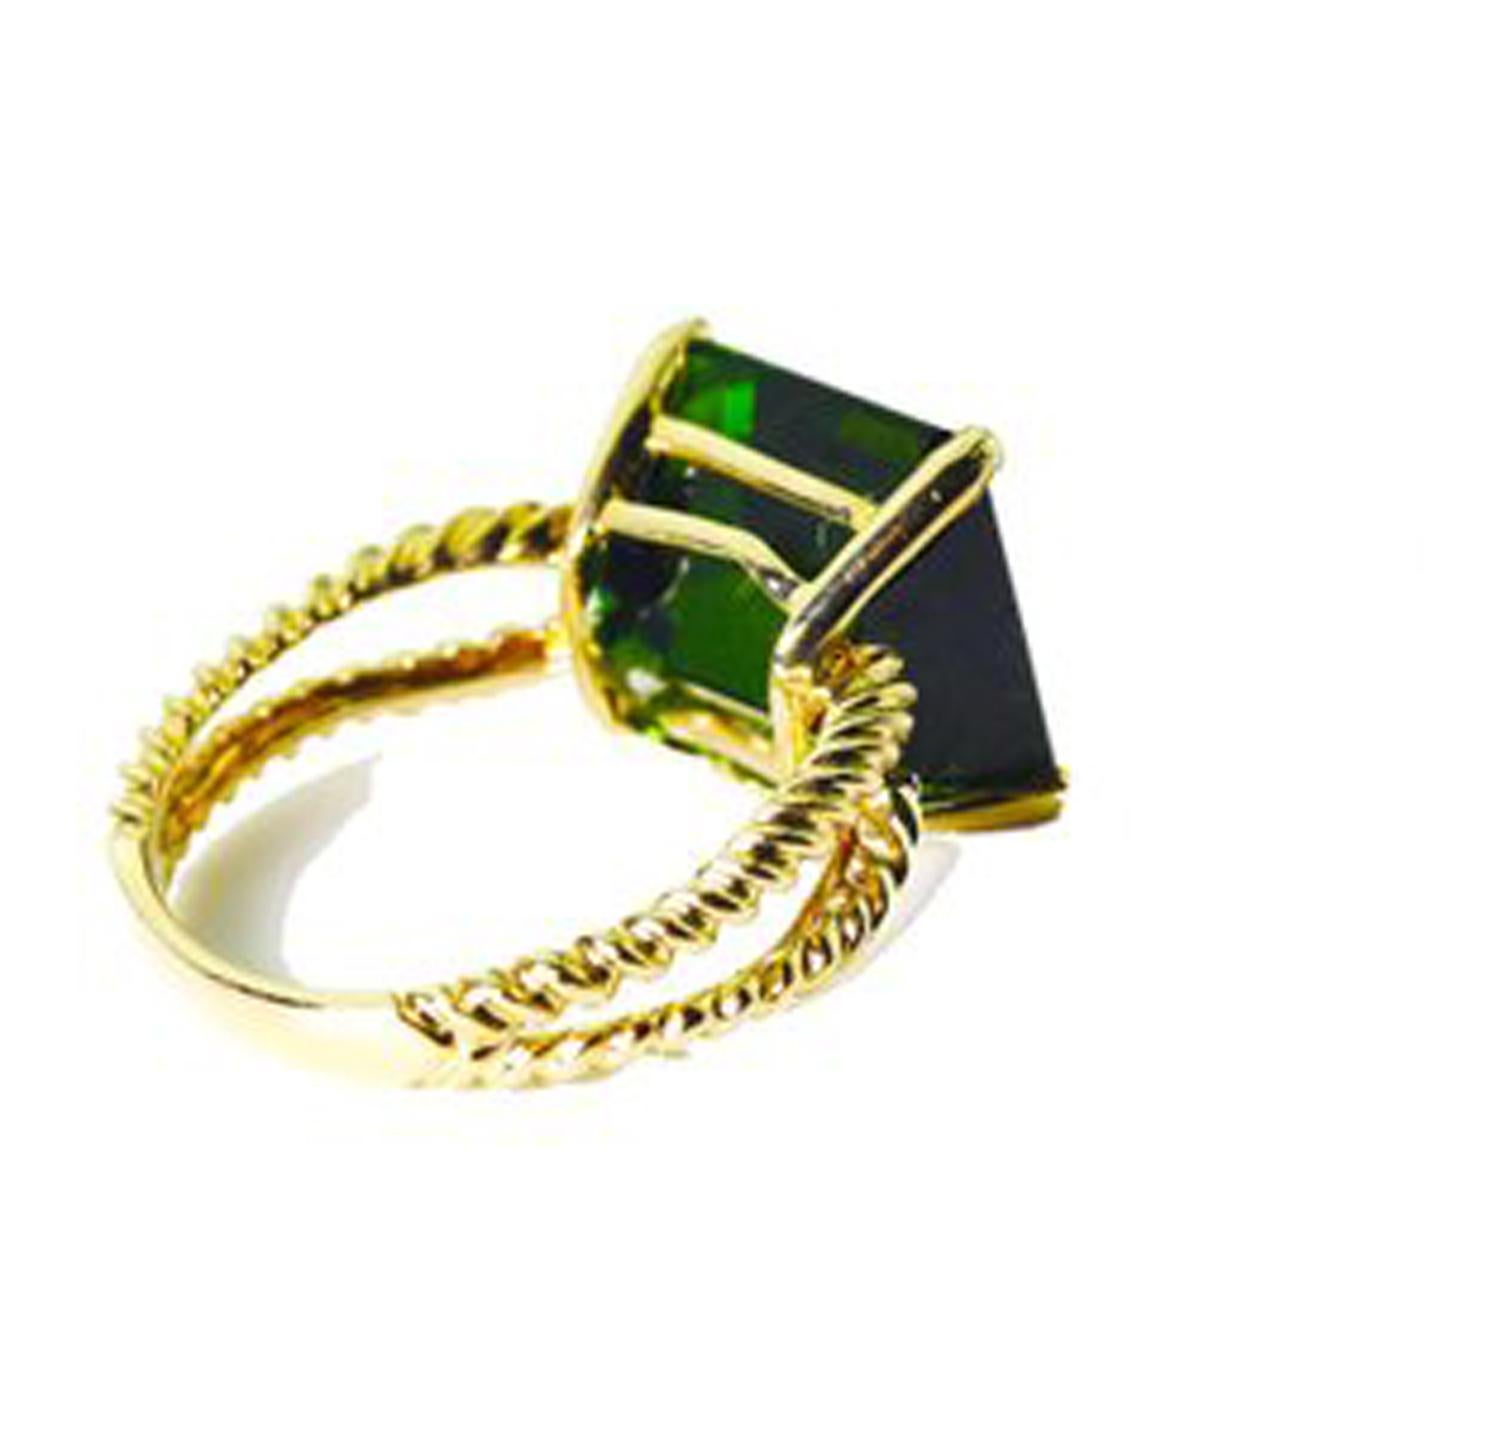 Gemjunky Translucent 10.96 Cts Glittering Green Tourmaline 14Kt Yellow Gold Ring 2